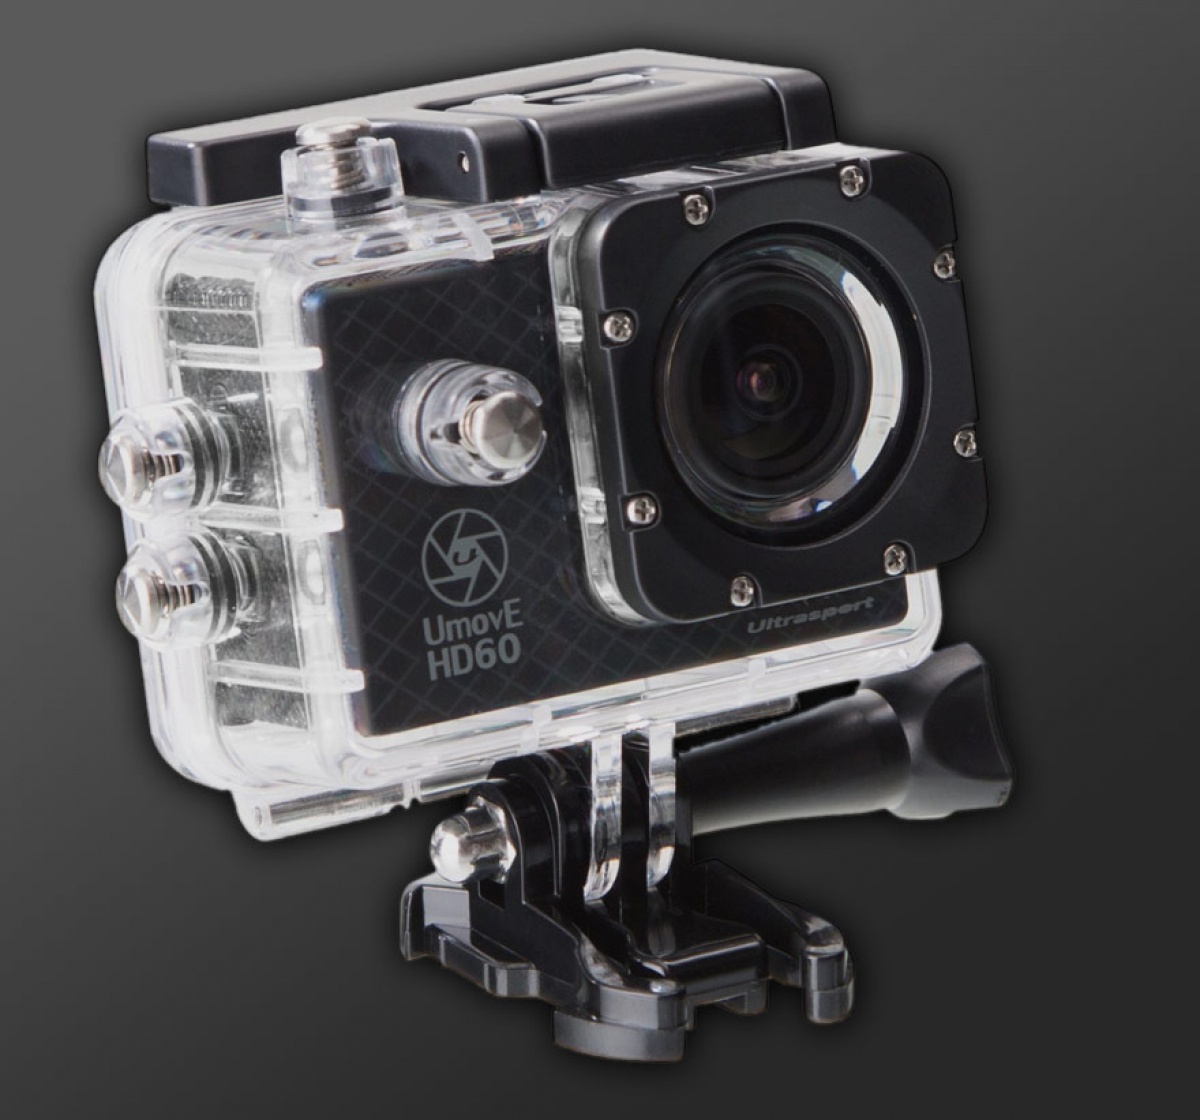 Ultrasport Actioncam - UmovE HD60